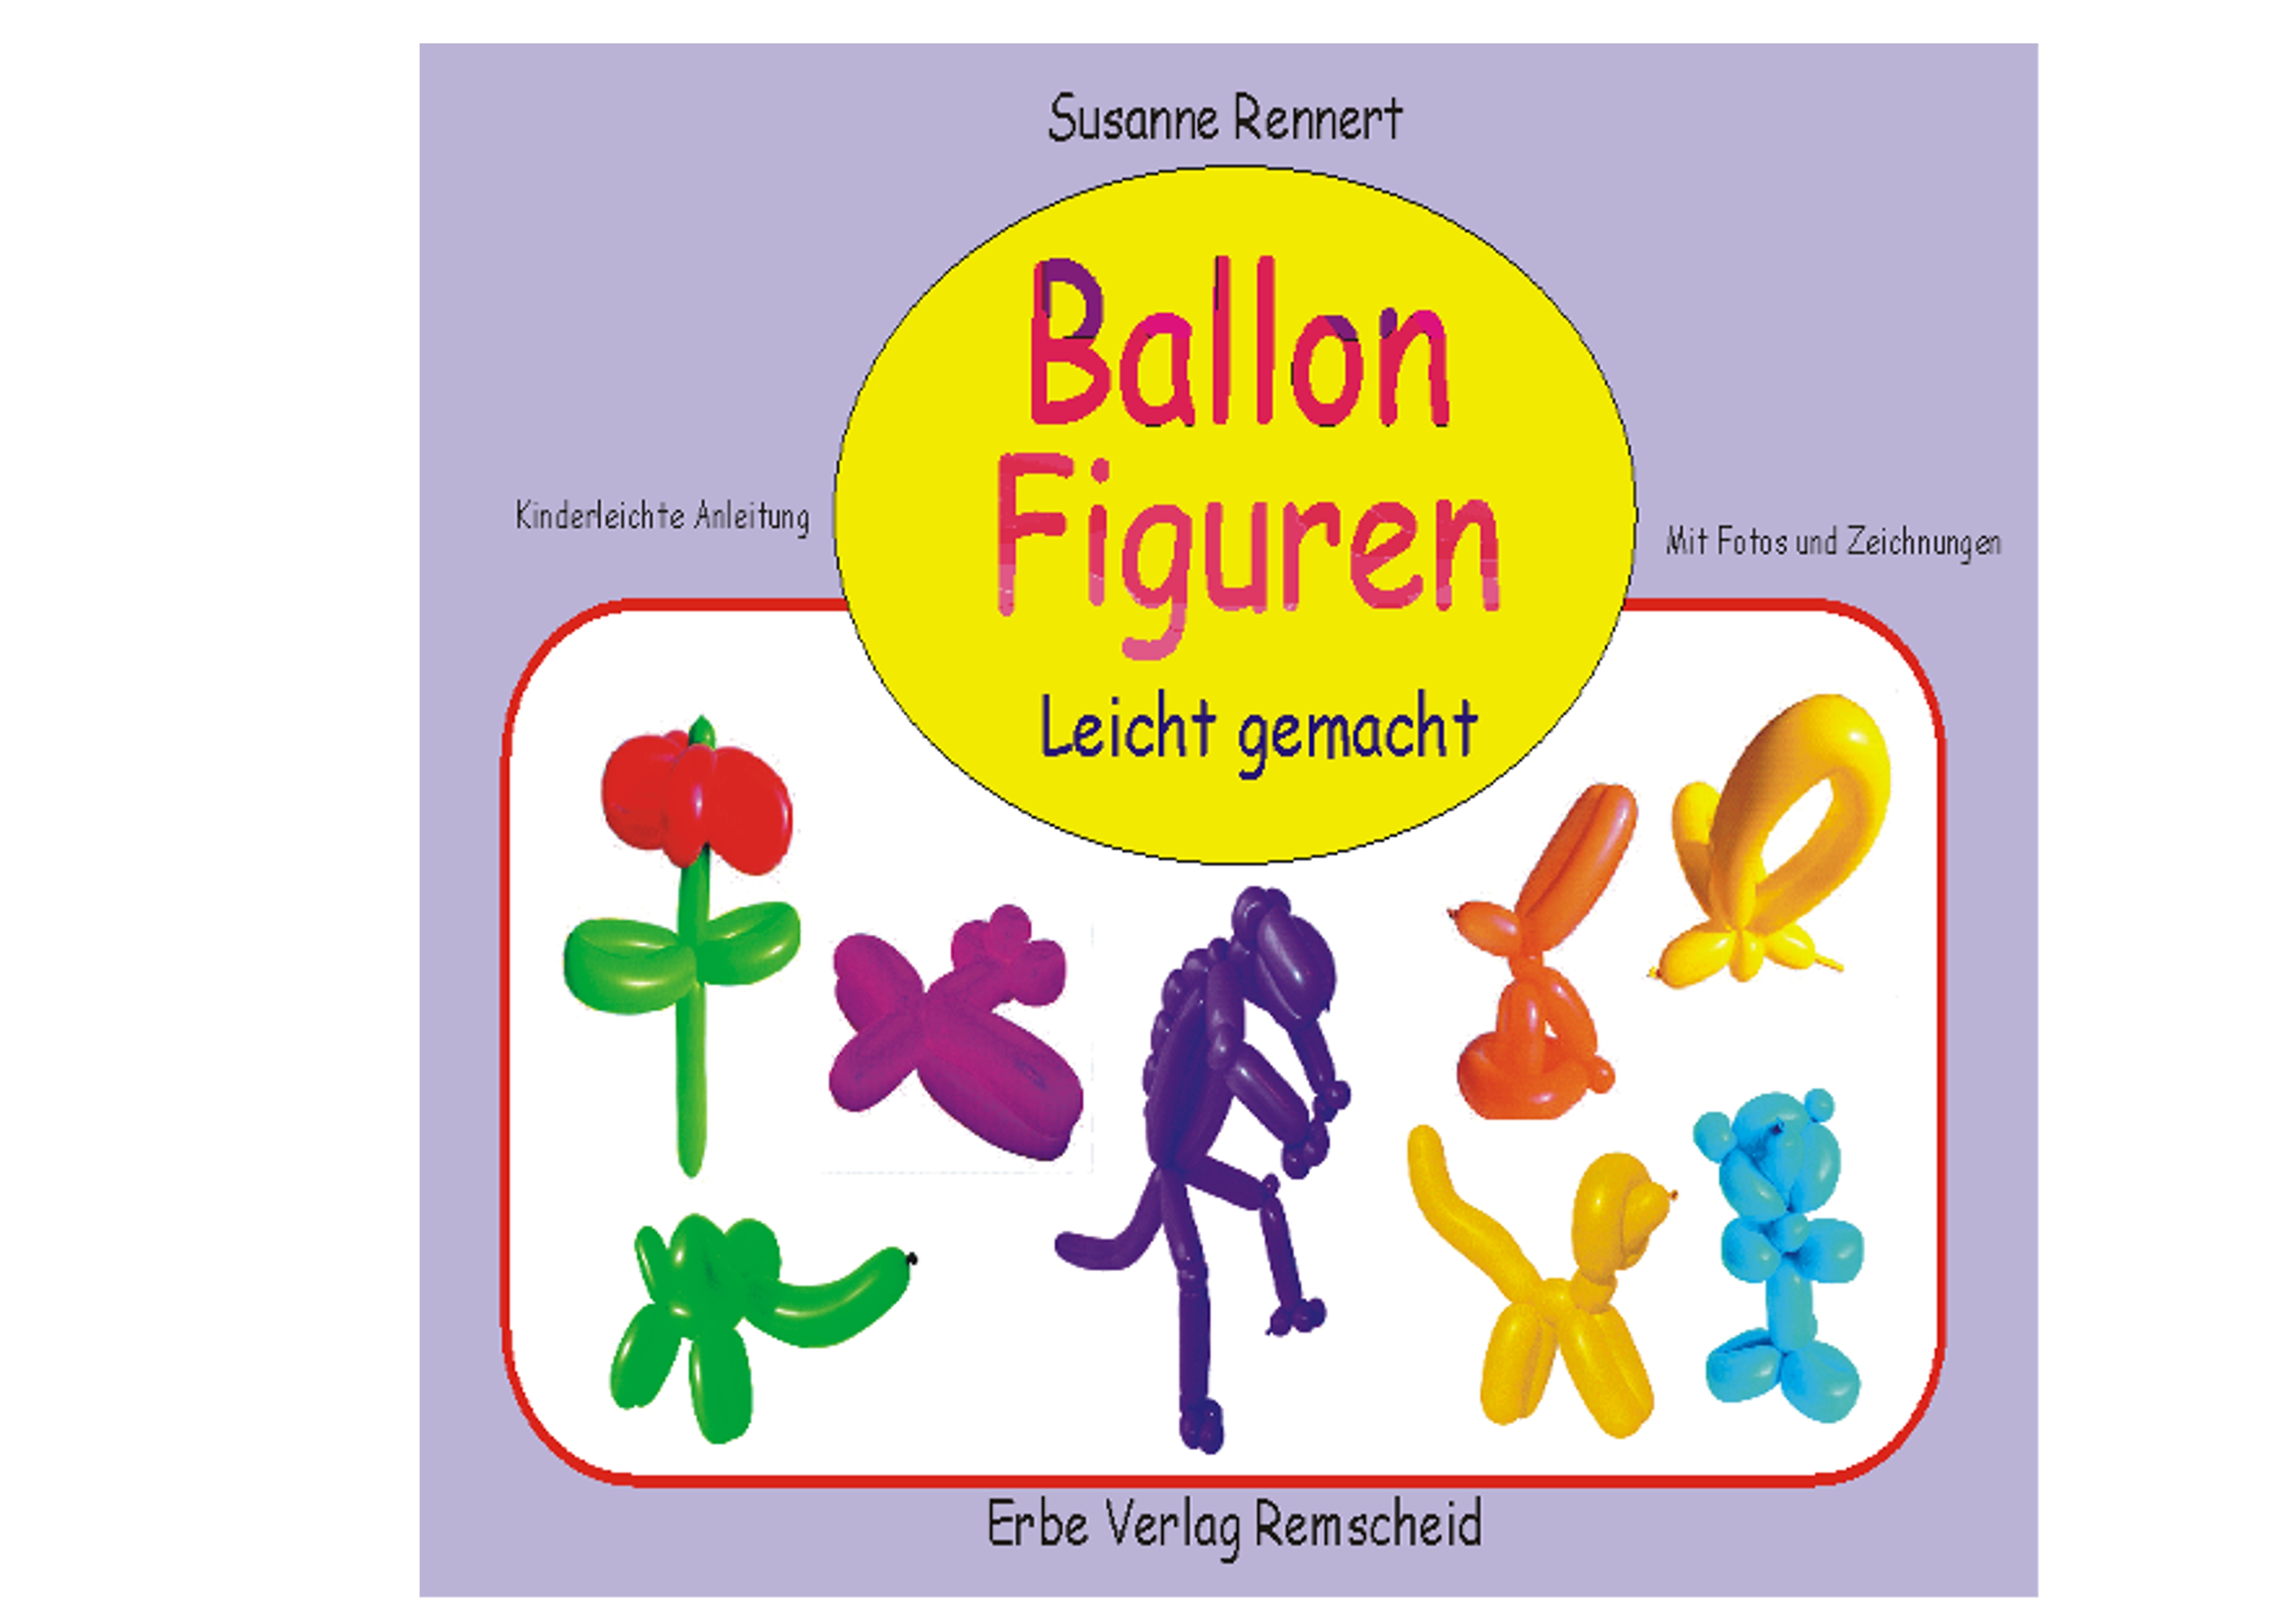 Ballonfiguren Erbe Verlag